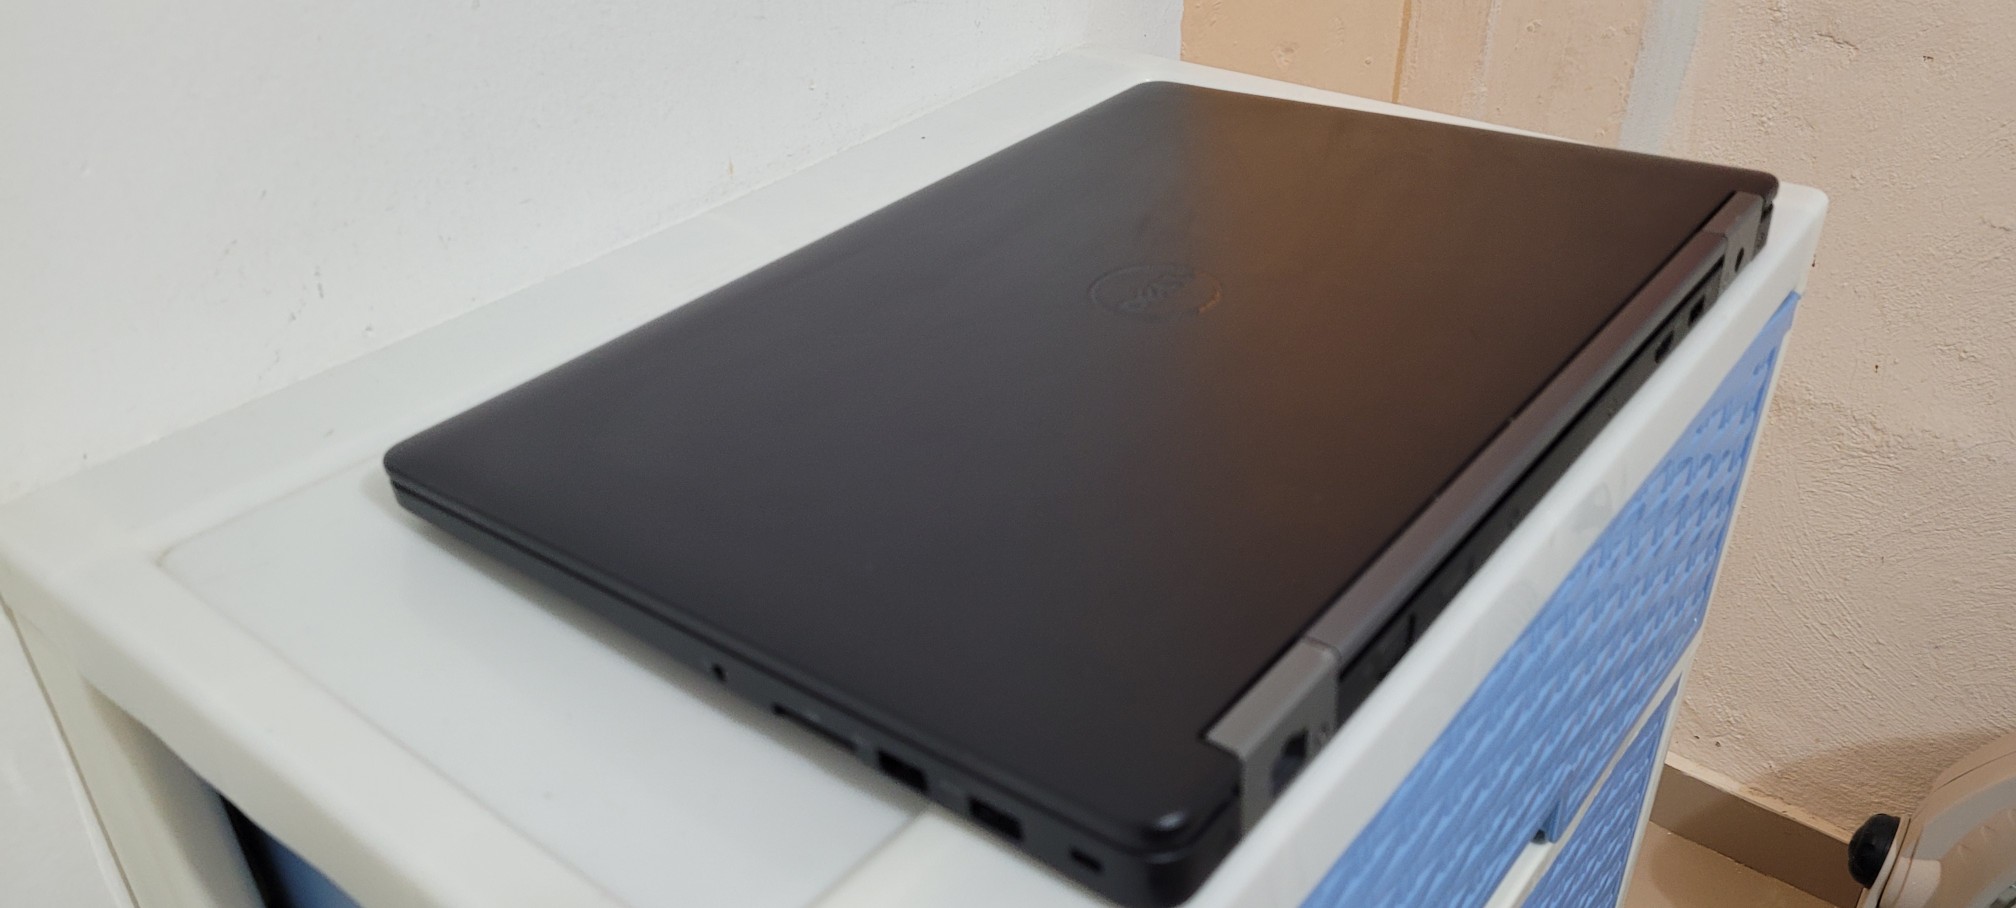 computadoras y laptops - Dell Slim 14 Pulg Core i7 6ta Ram 16gb ddr4 Disco 256gb SSD Solido Video 8gb 2